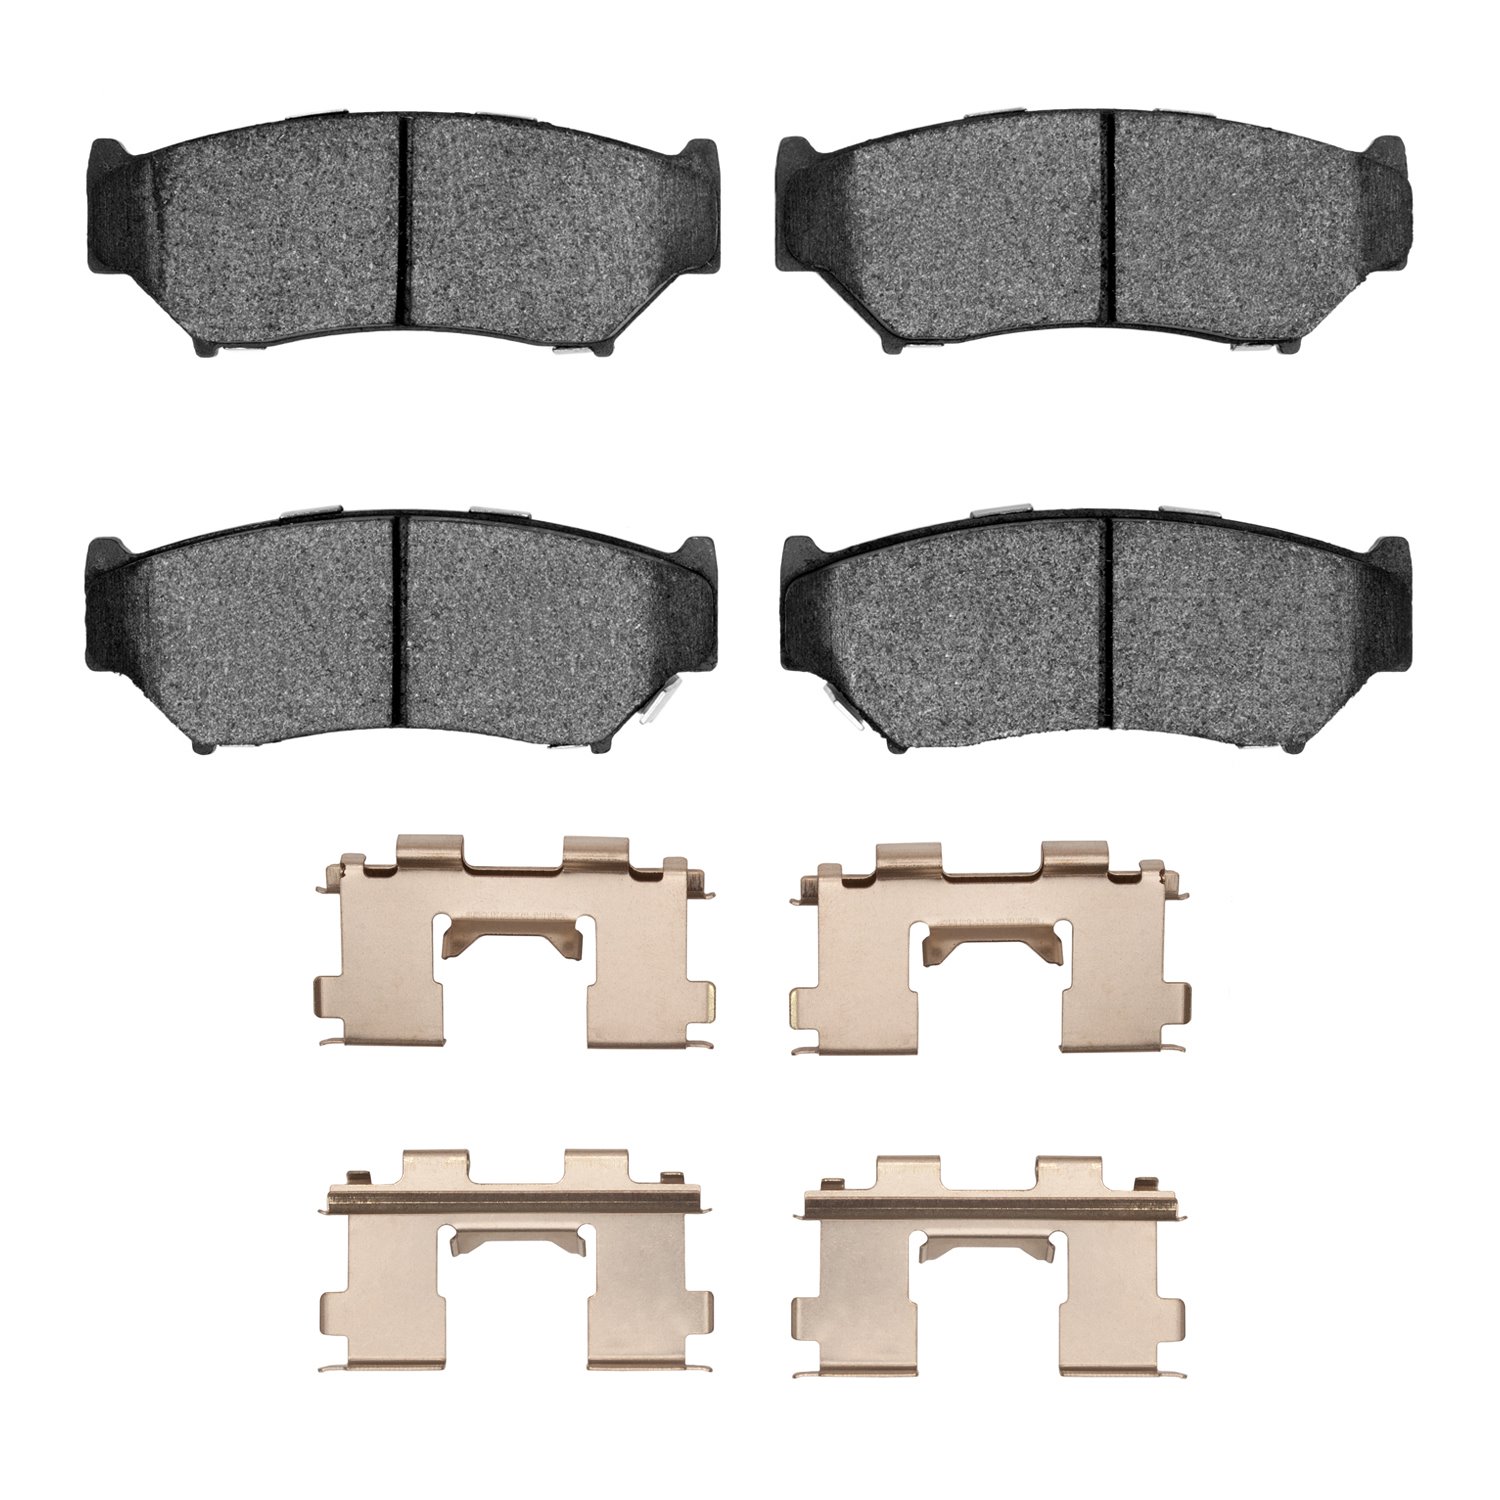 Optimum OE Brake Pads & Hardware Kit, 1998-2004 Fits Multiple Makes/Models, Position: Front